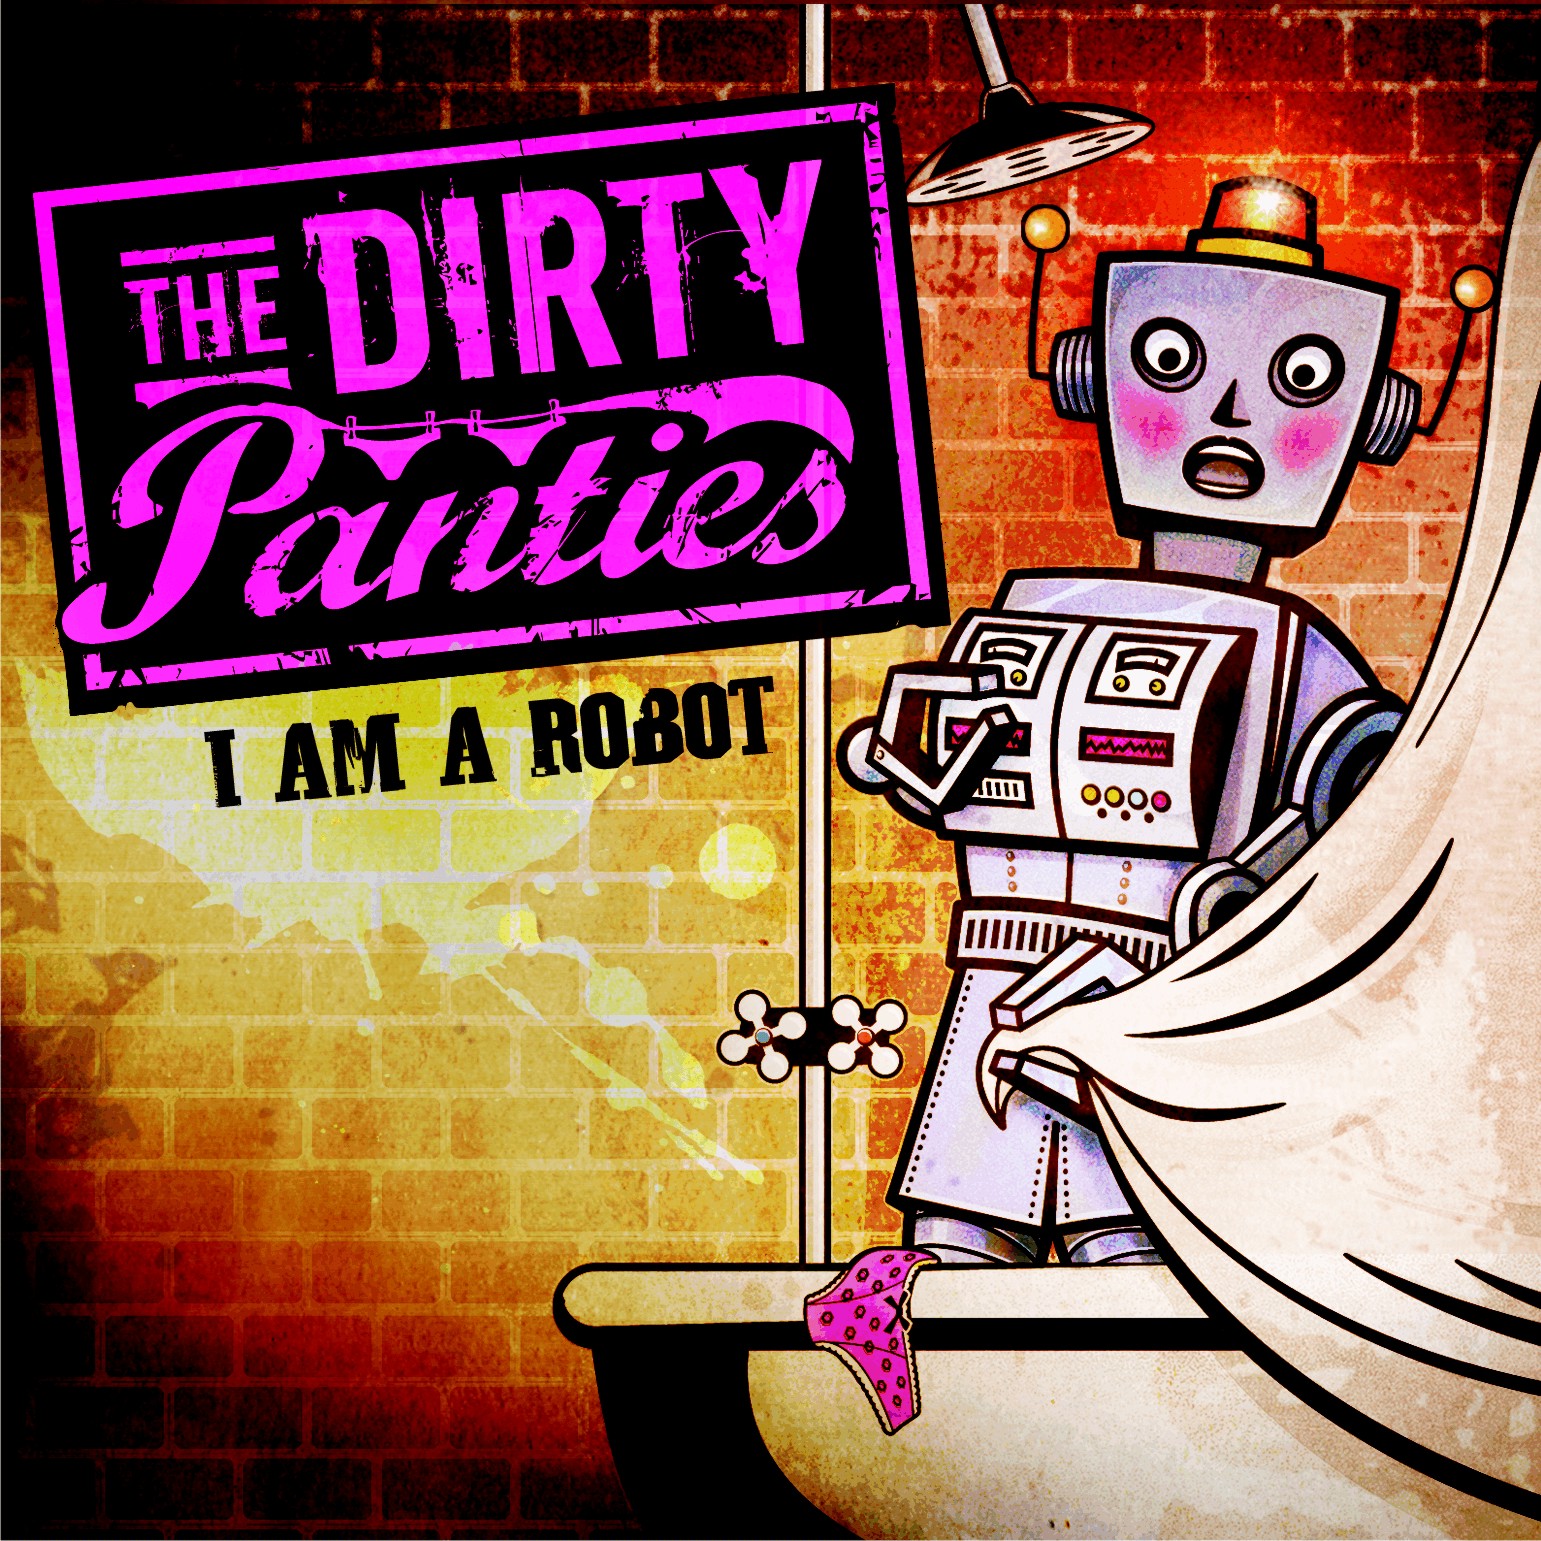 The Dirty Panties